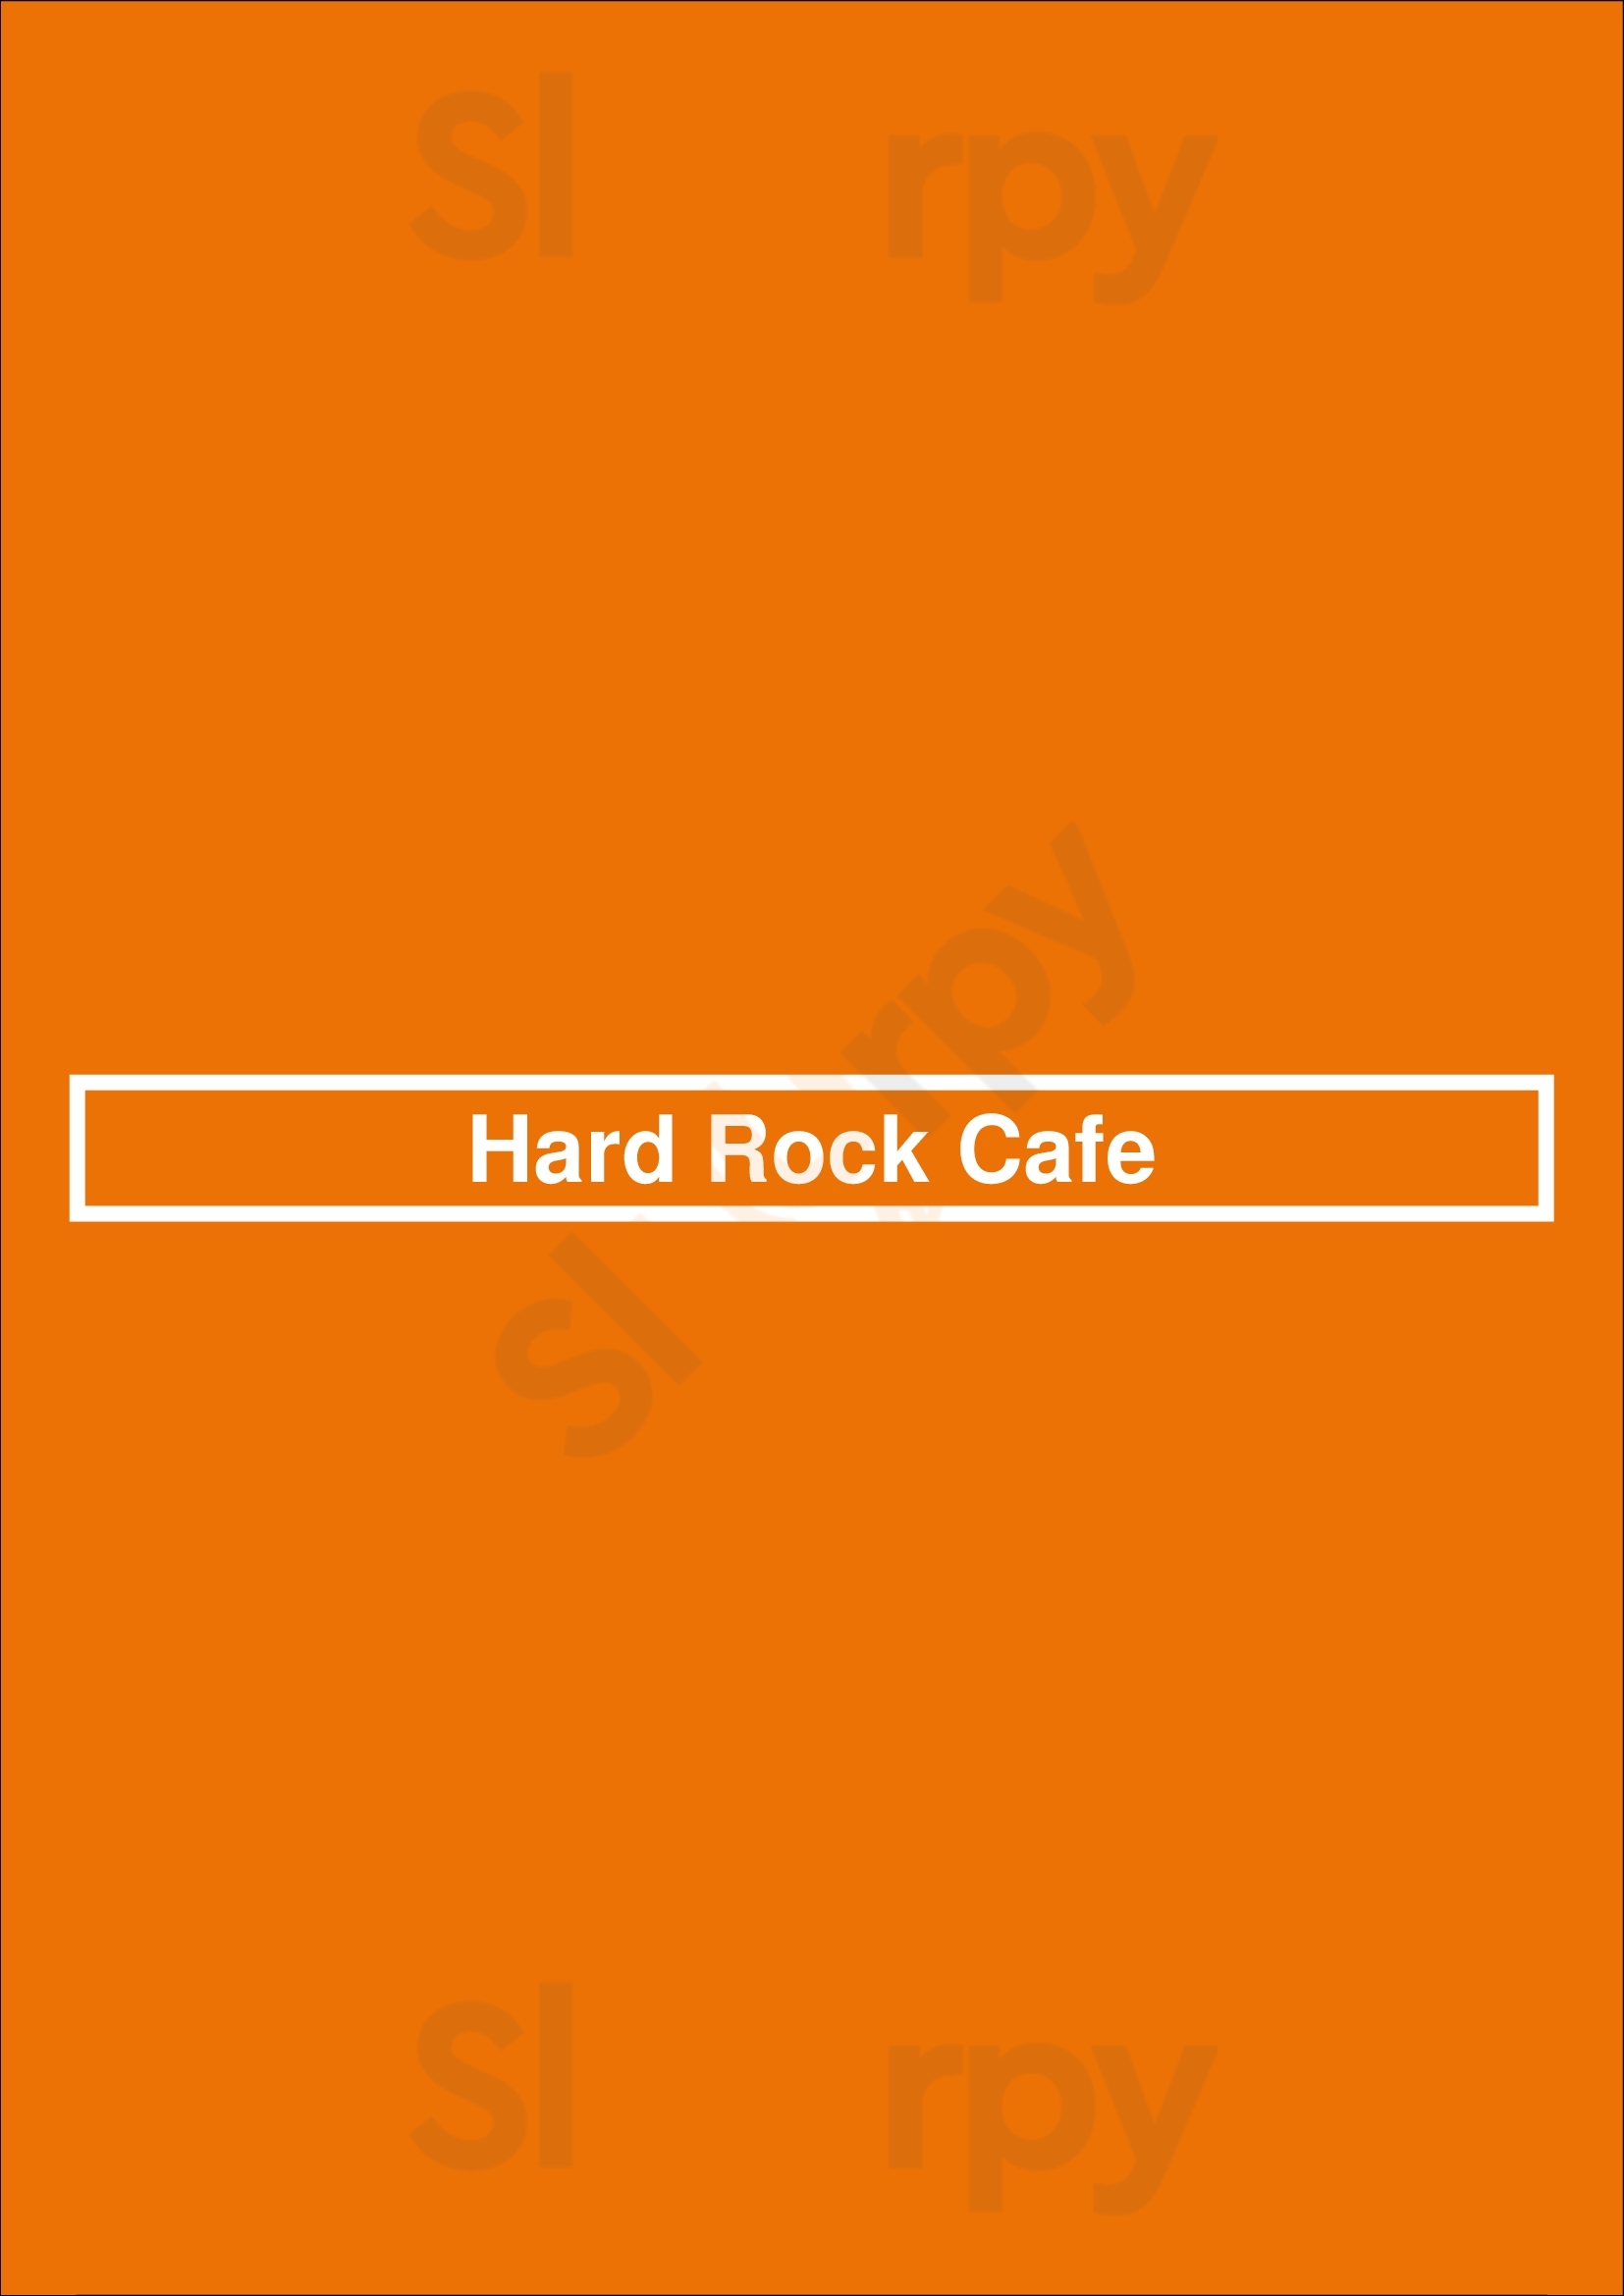 Hard Rock Cafe Louisville Menu - 1